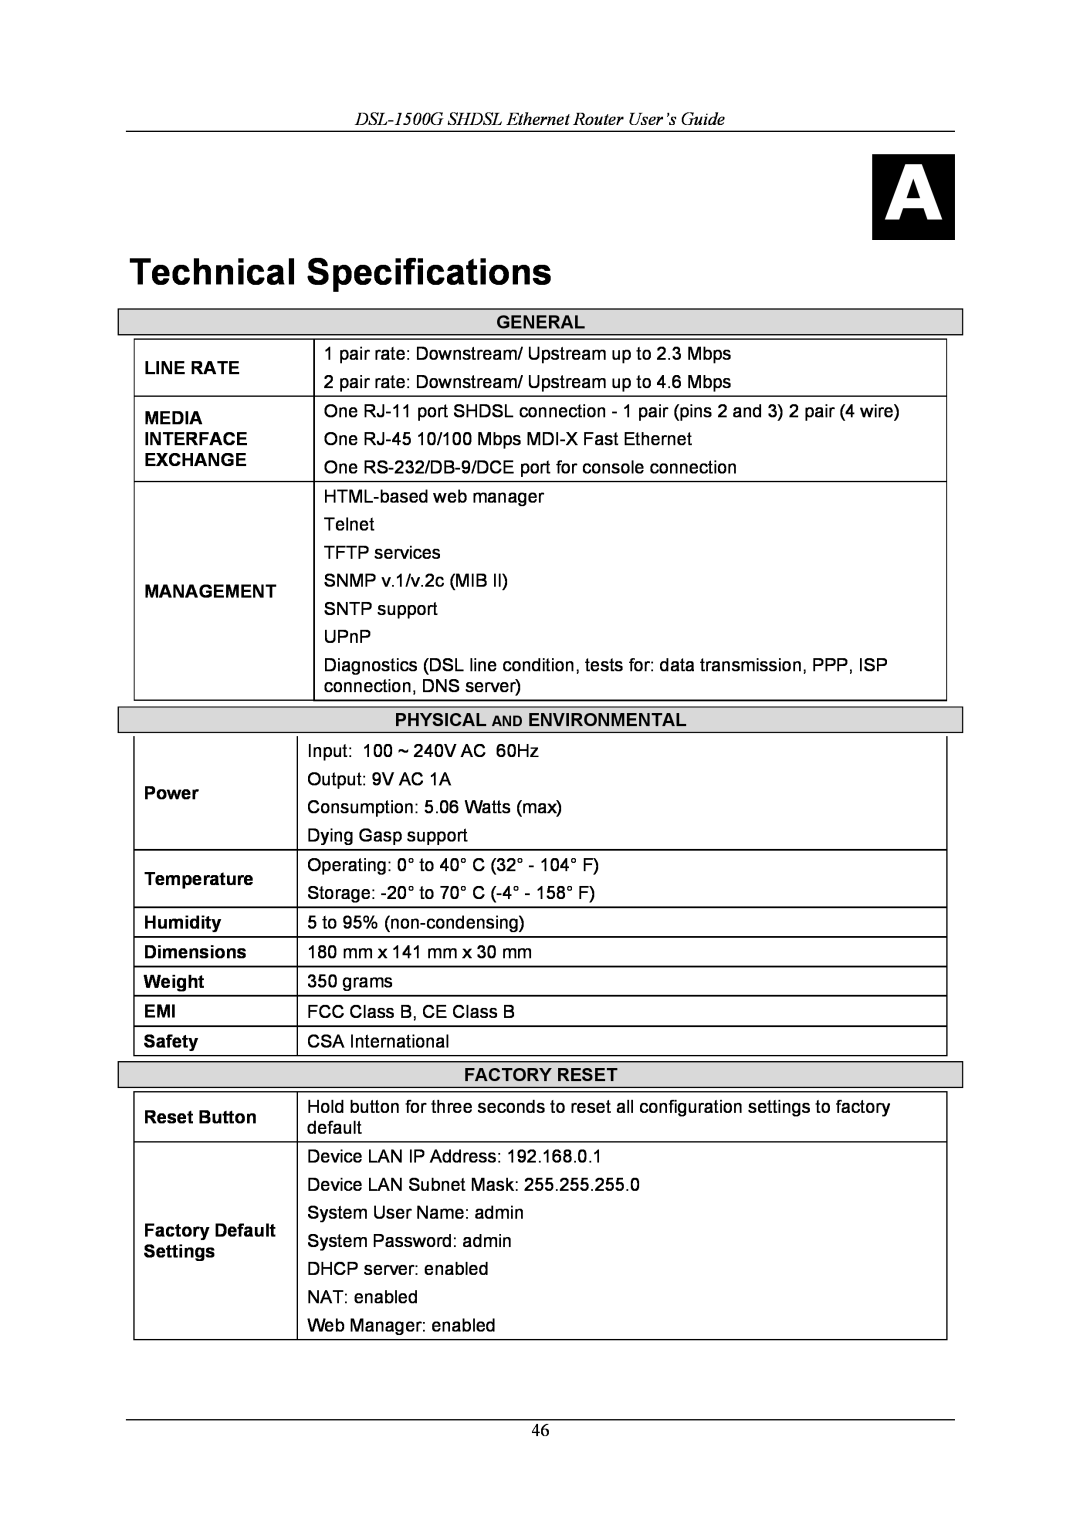 D-Link manual Technical Specifications, DSL-1500G SHDSL Ethernet Router User’s Guide 